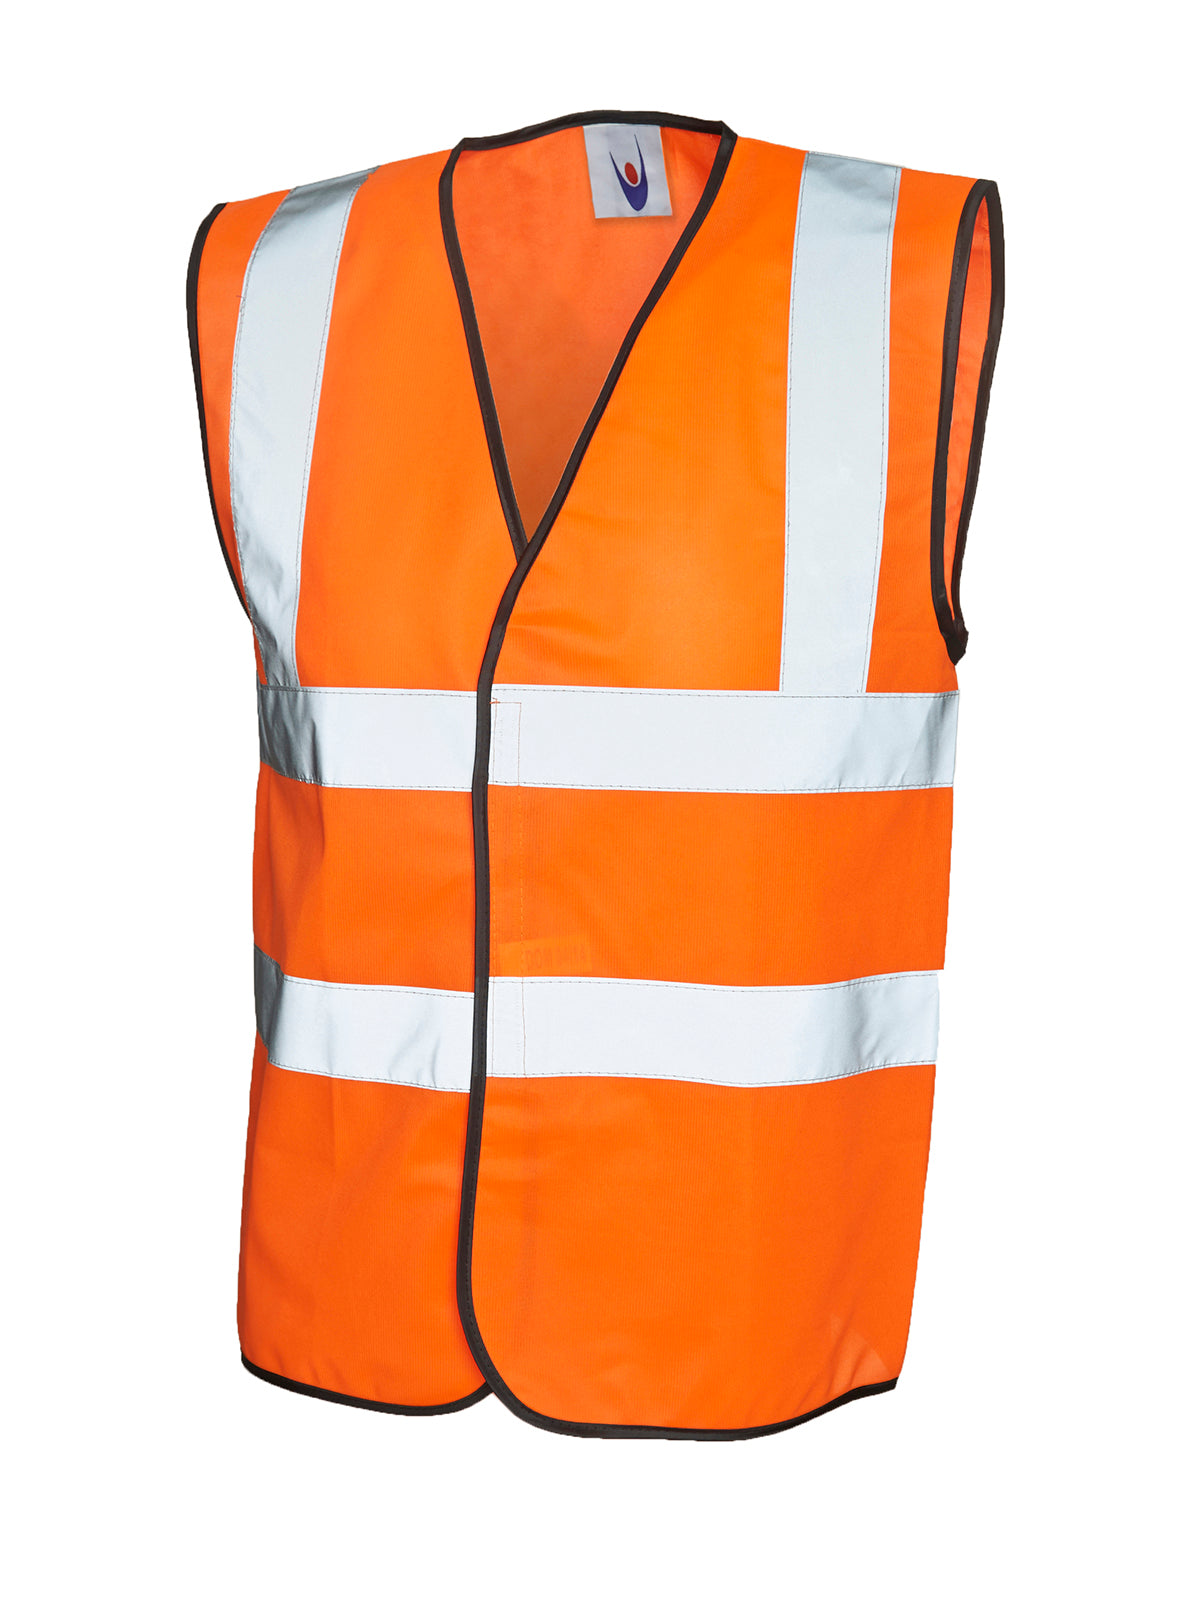 Uneek Sleeveless Safety Waist Coat UC801 - Orange